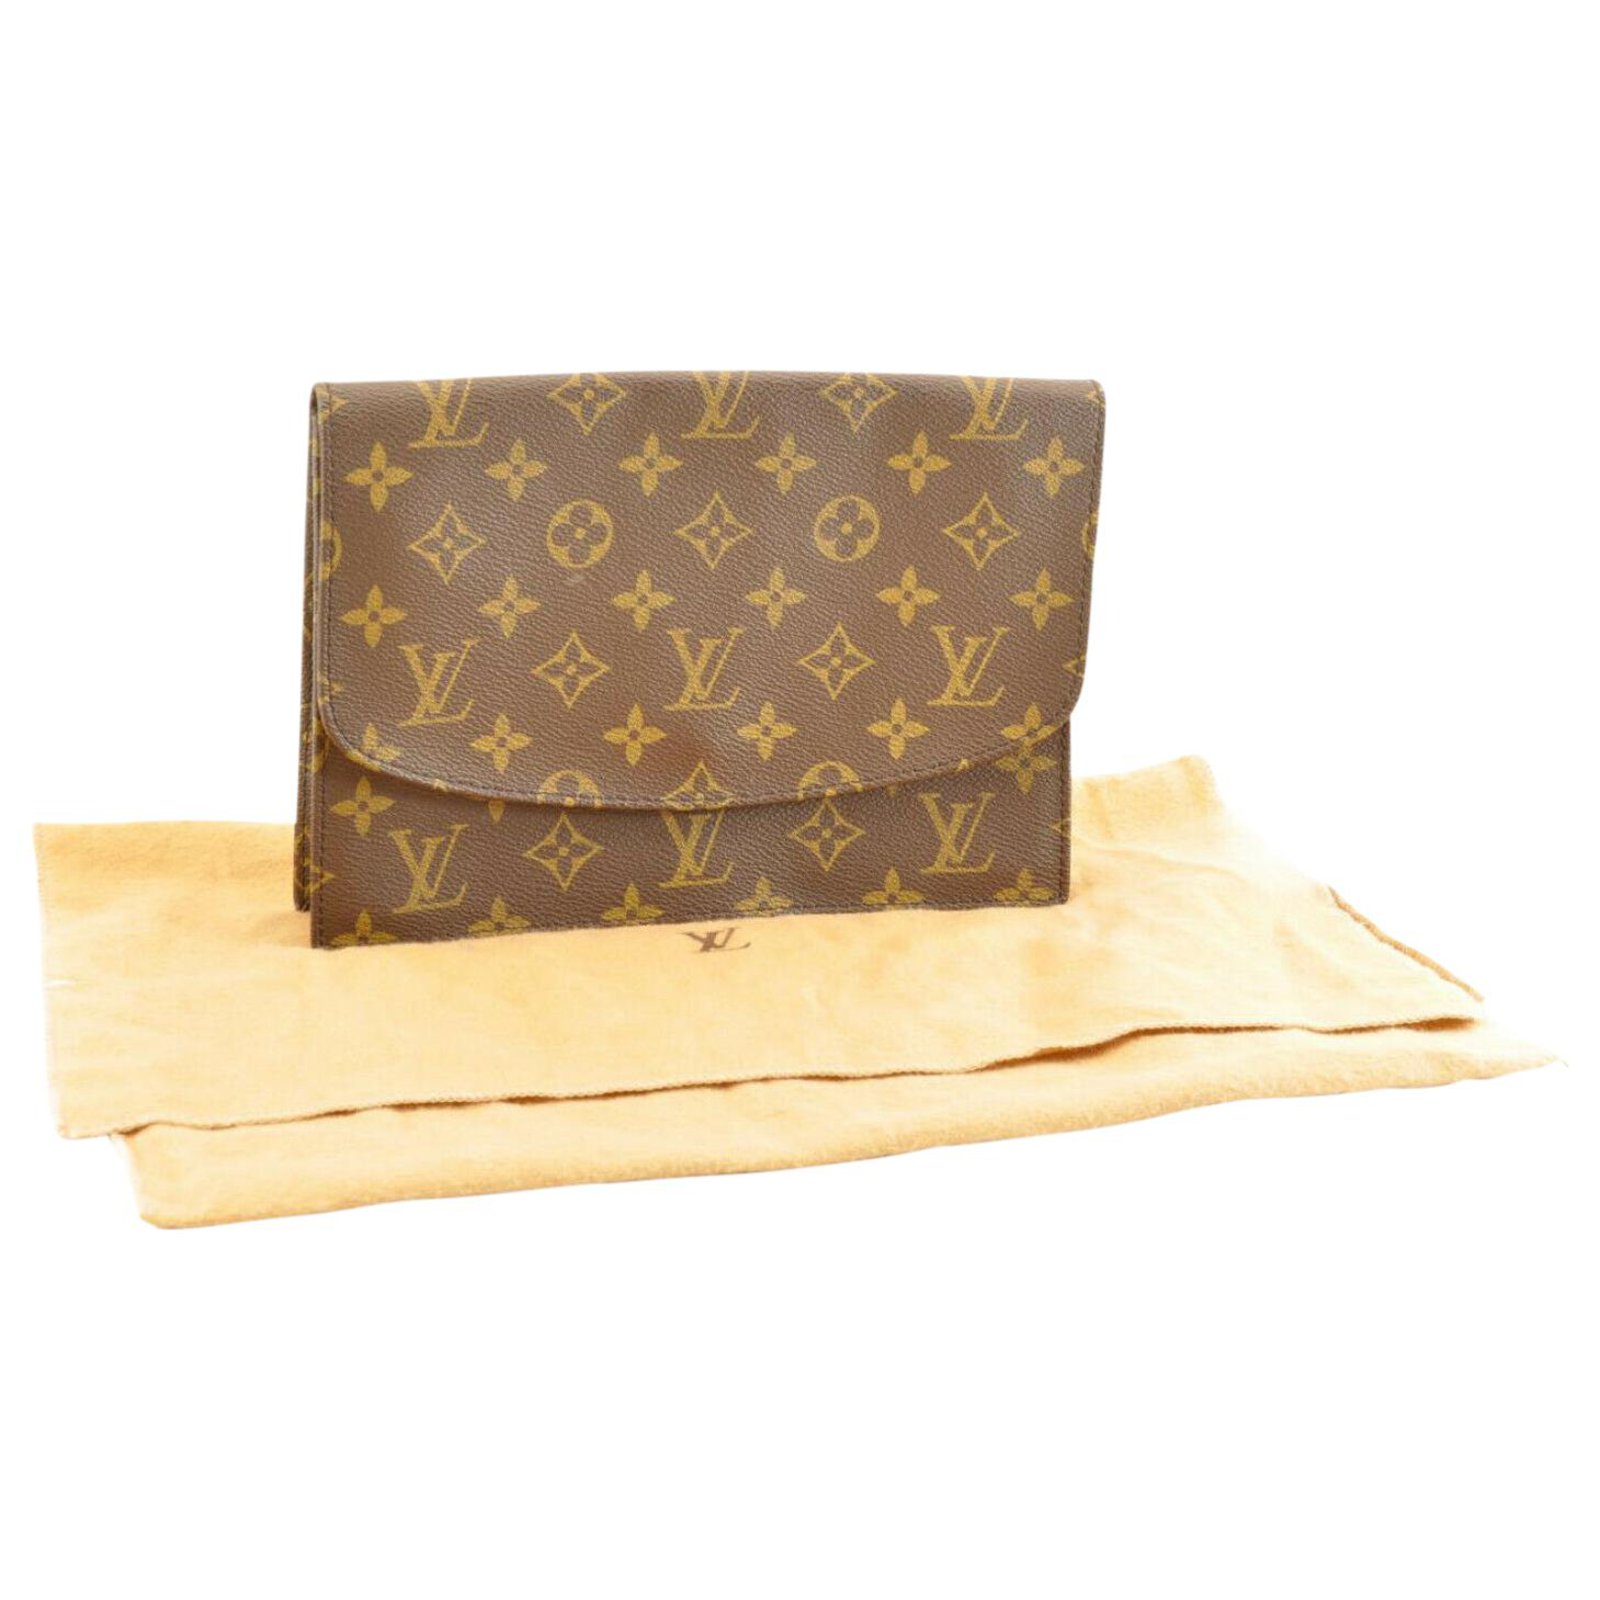 Louis Vuitton - pochette rabat - Bag - Catawiki